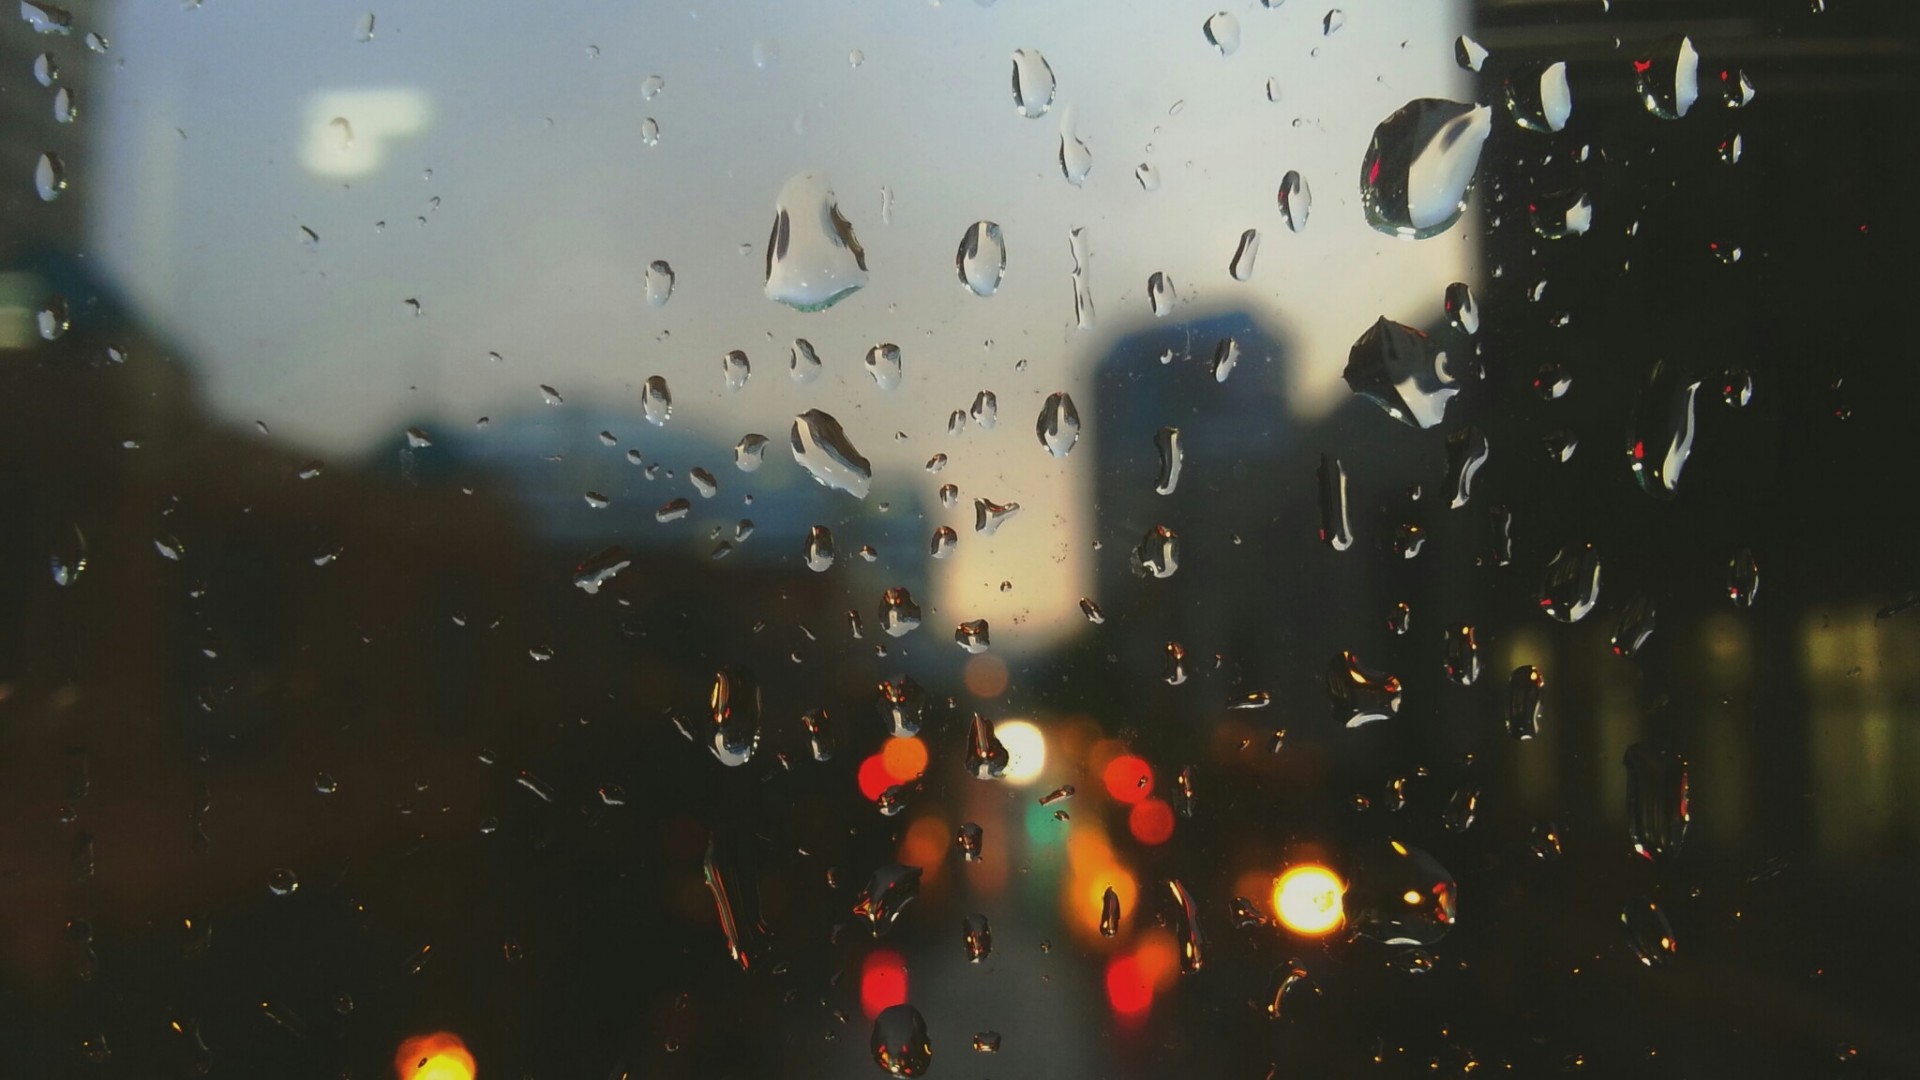 Raindrops on Window Full HD Wallpaper iPhone 7 Plus / iPhone 8 Plus - HD  Wallpaper 